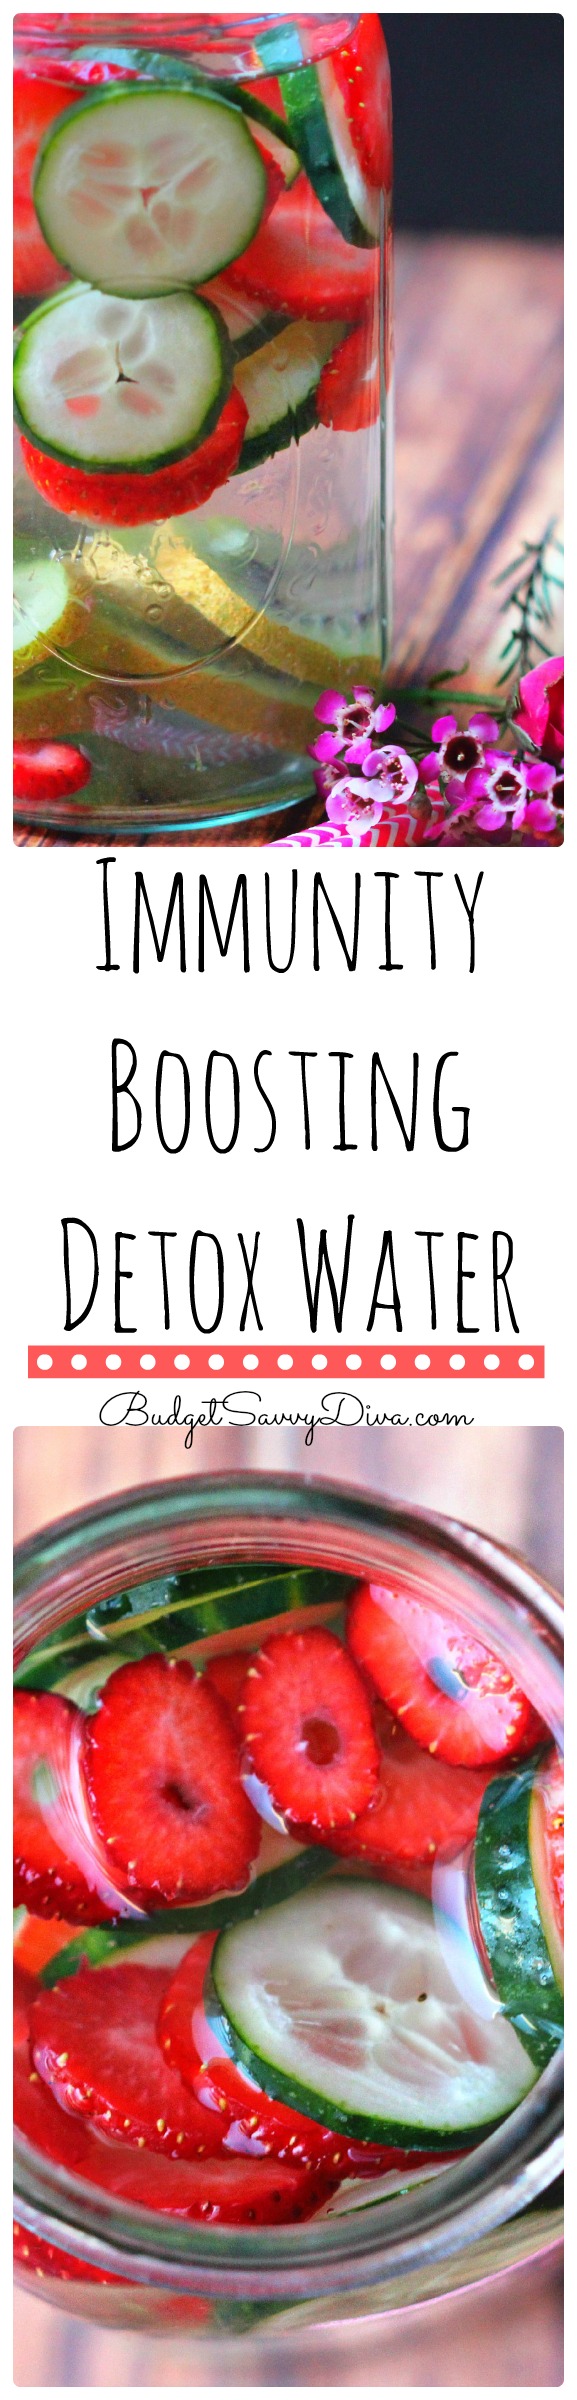 Immunity Boosting Detox Water Recipe 